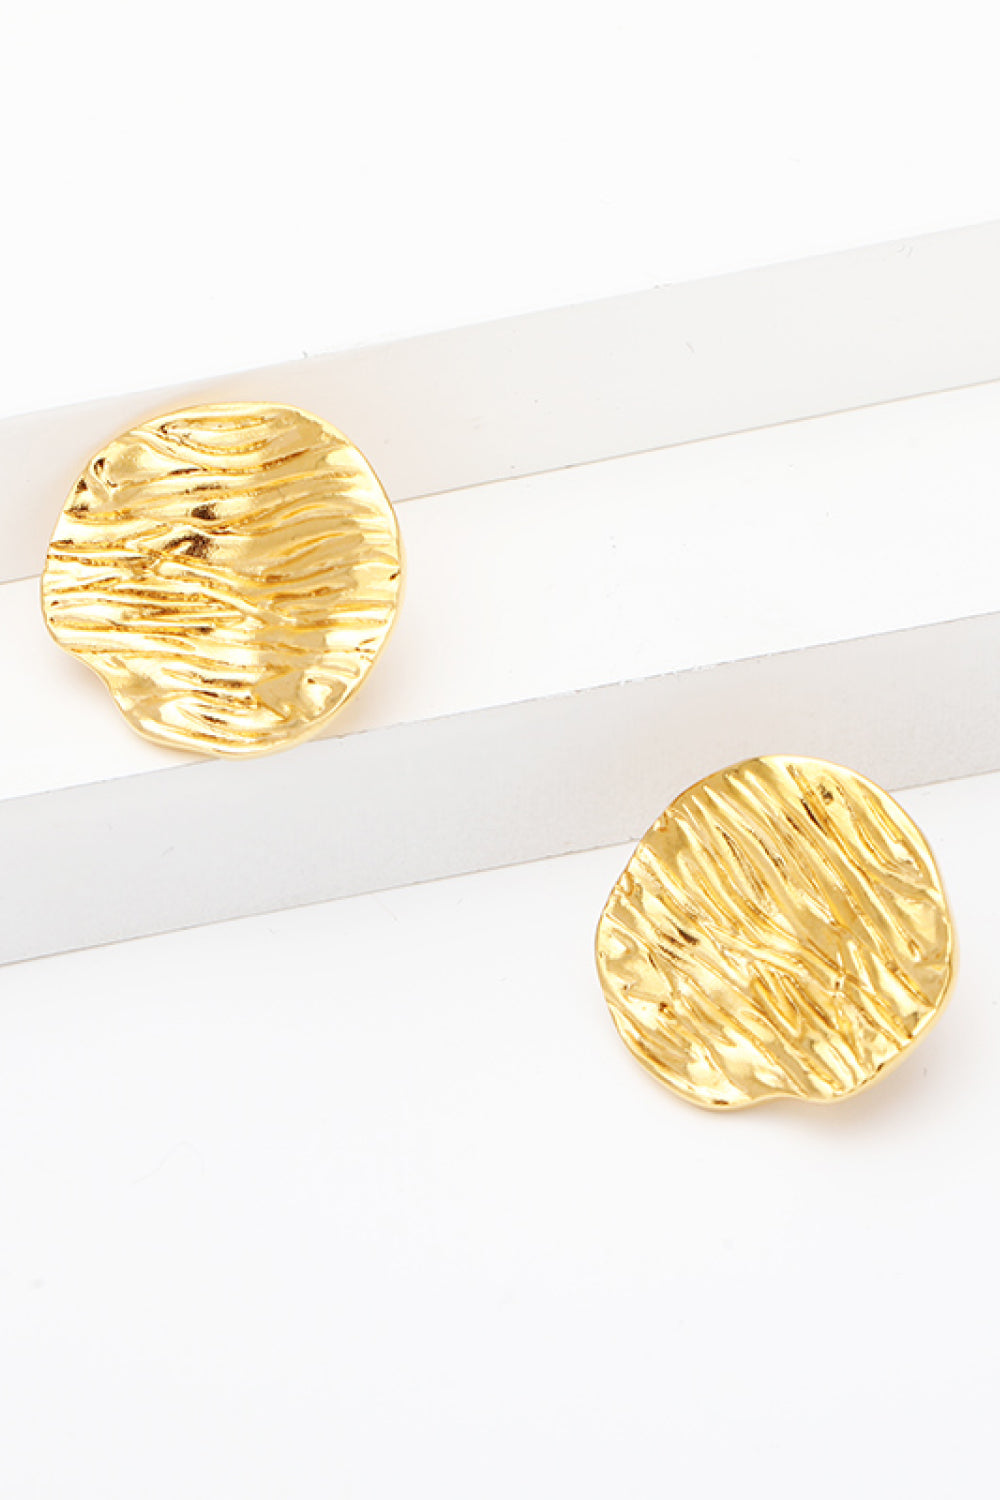 18k Gold-Plated Woven Stud Earrings